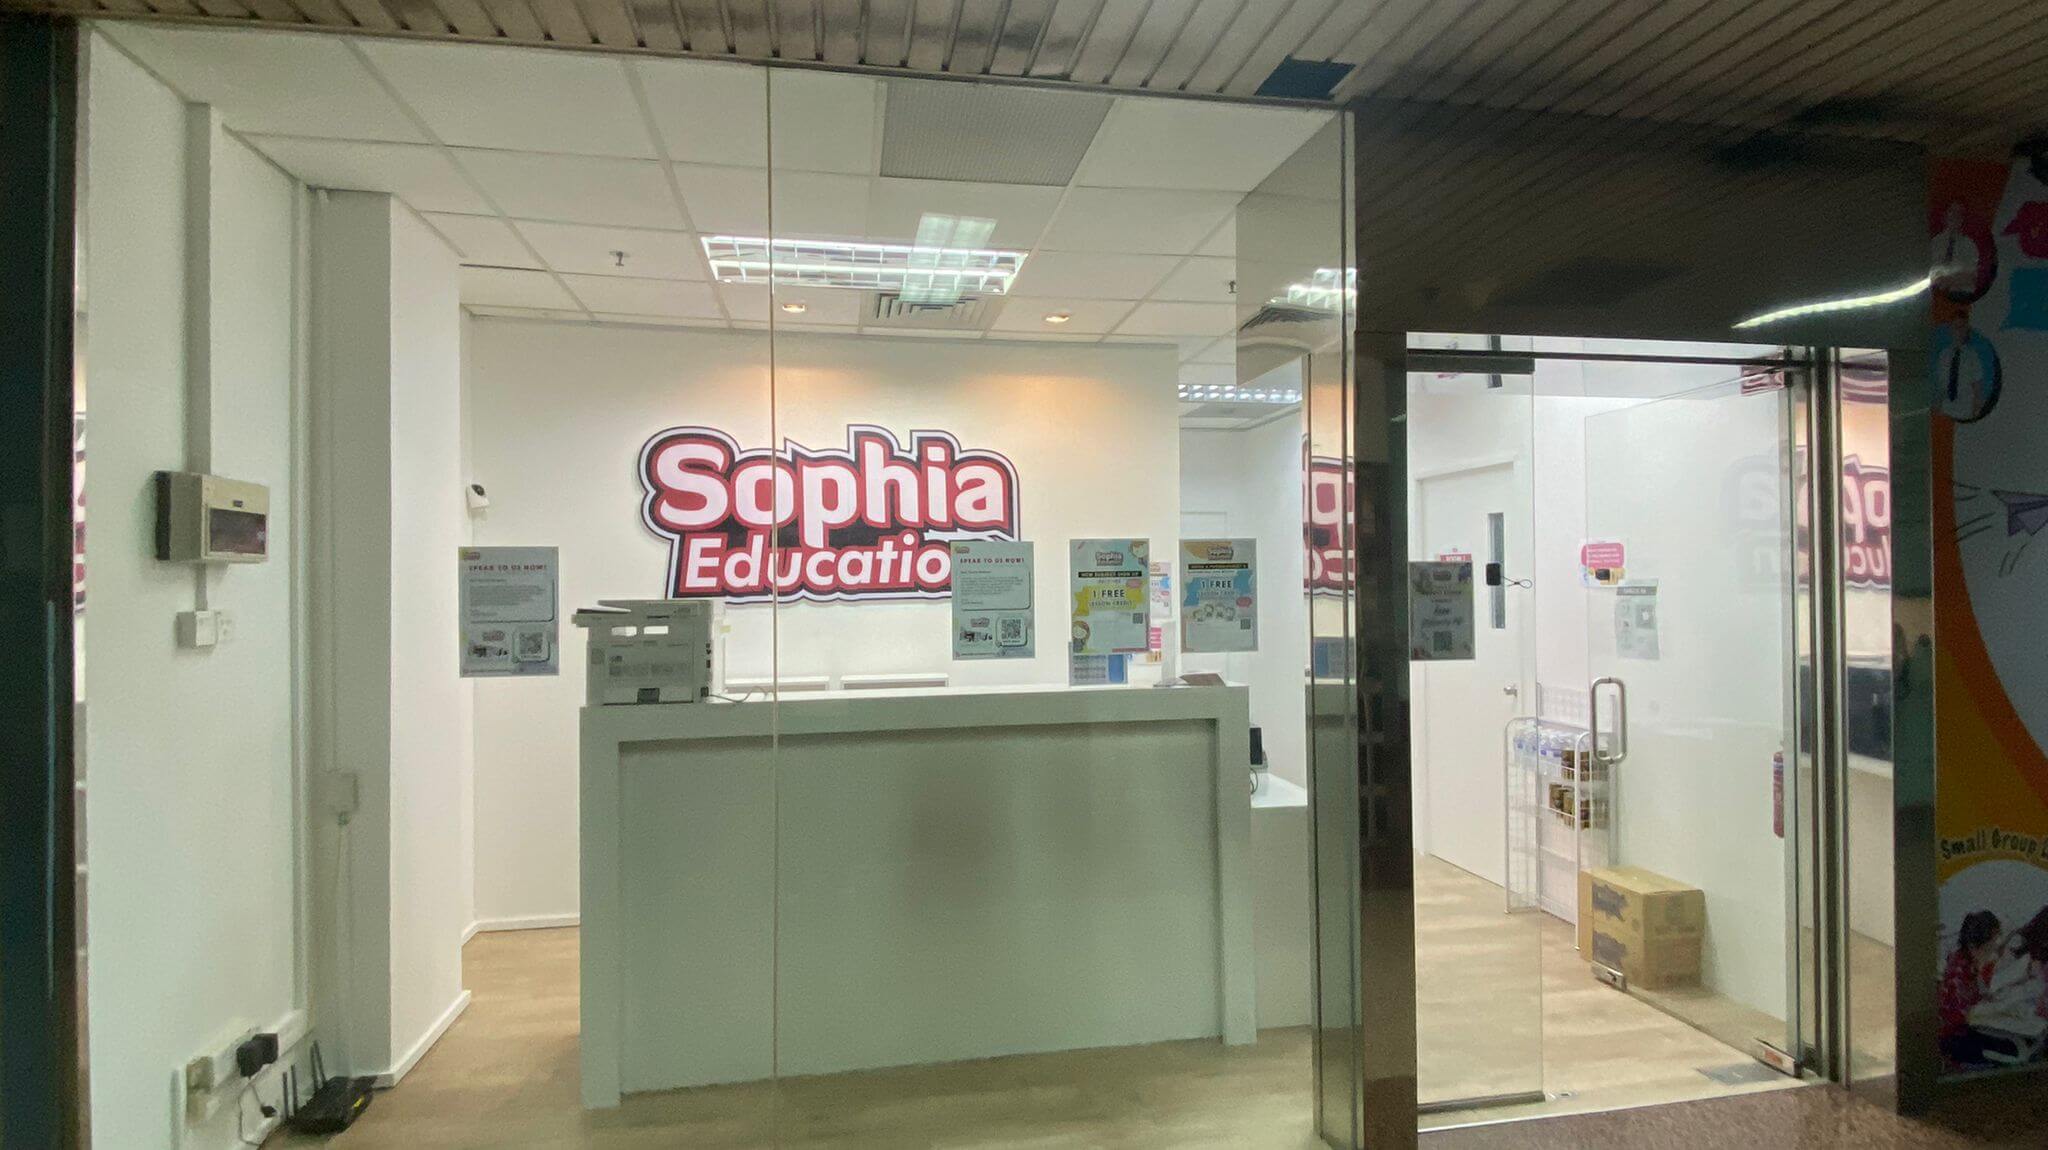 Sophia Education